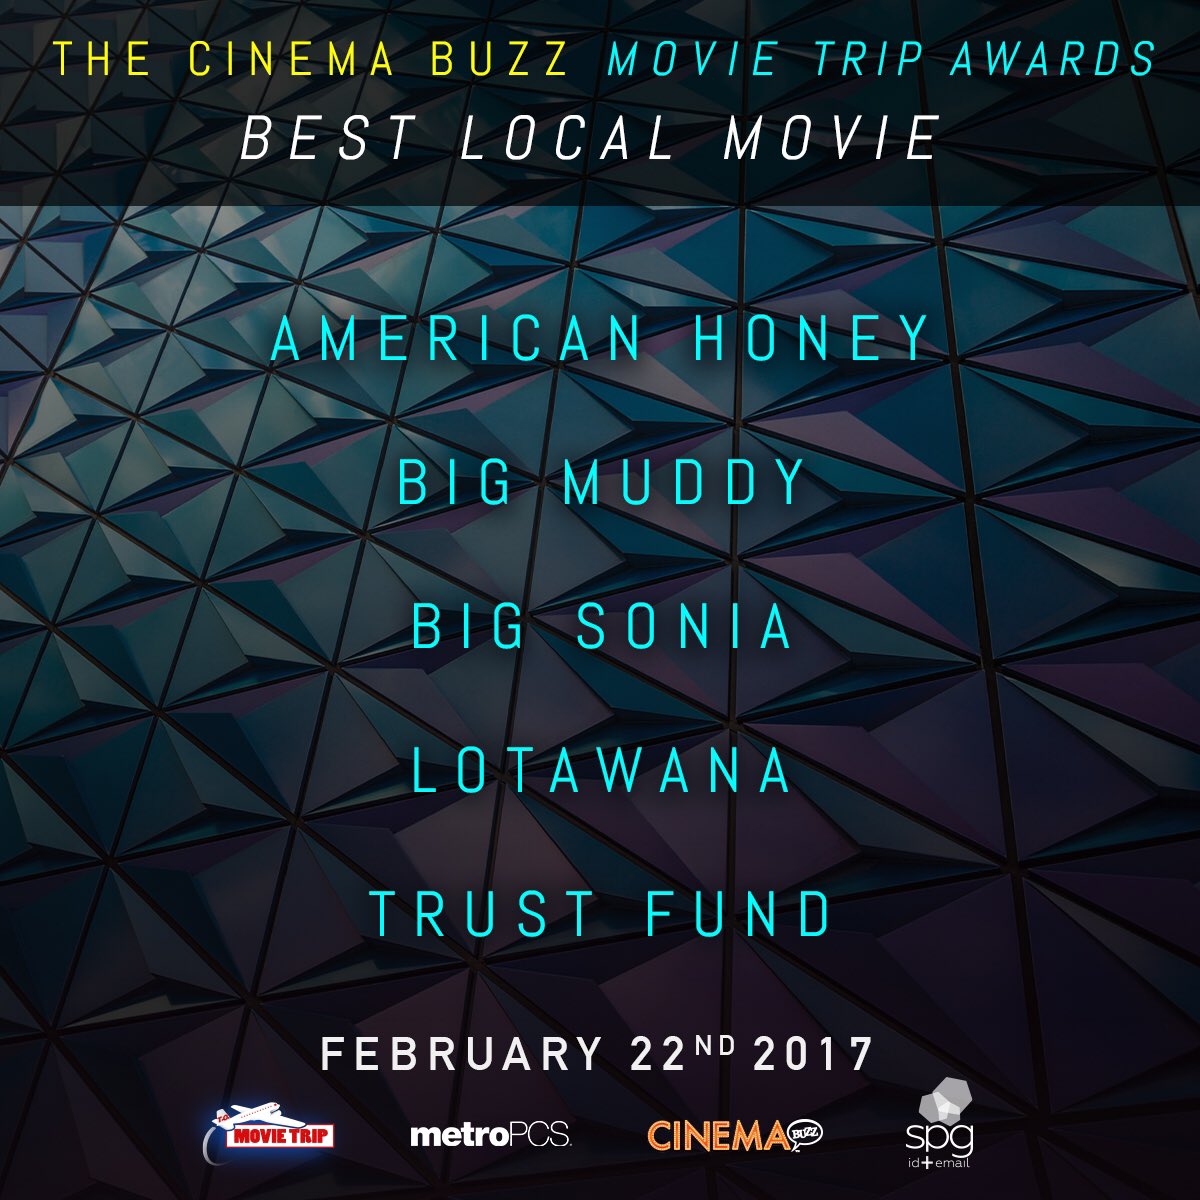 VOTE: goo.gl/tkEMZ9 
#MovieTripAwards

BEST LOCAL MOVIE
@honeymovie
#BigMuddy
@bigsoniamovie
@Lotawanamovie
@TrustFundMovie